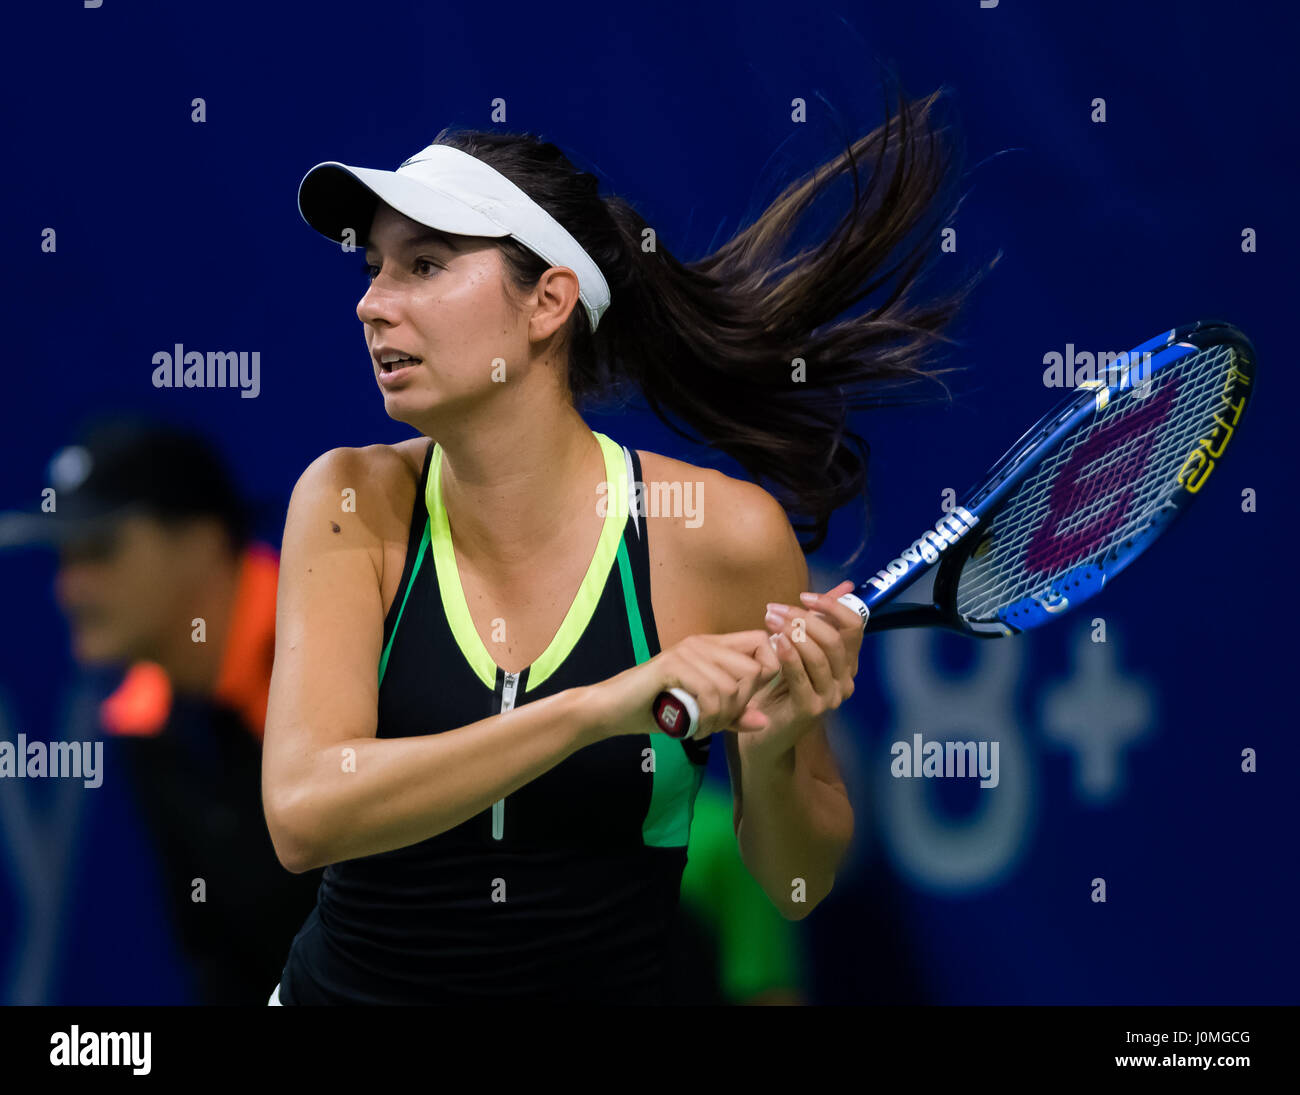 BIEL, SWITZERLAND - APRIL 12 : Oceane Dodin in action at the 2017 Ladies Open Biel WTA International tennis tournament Stock Photo